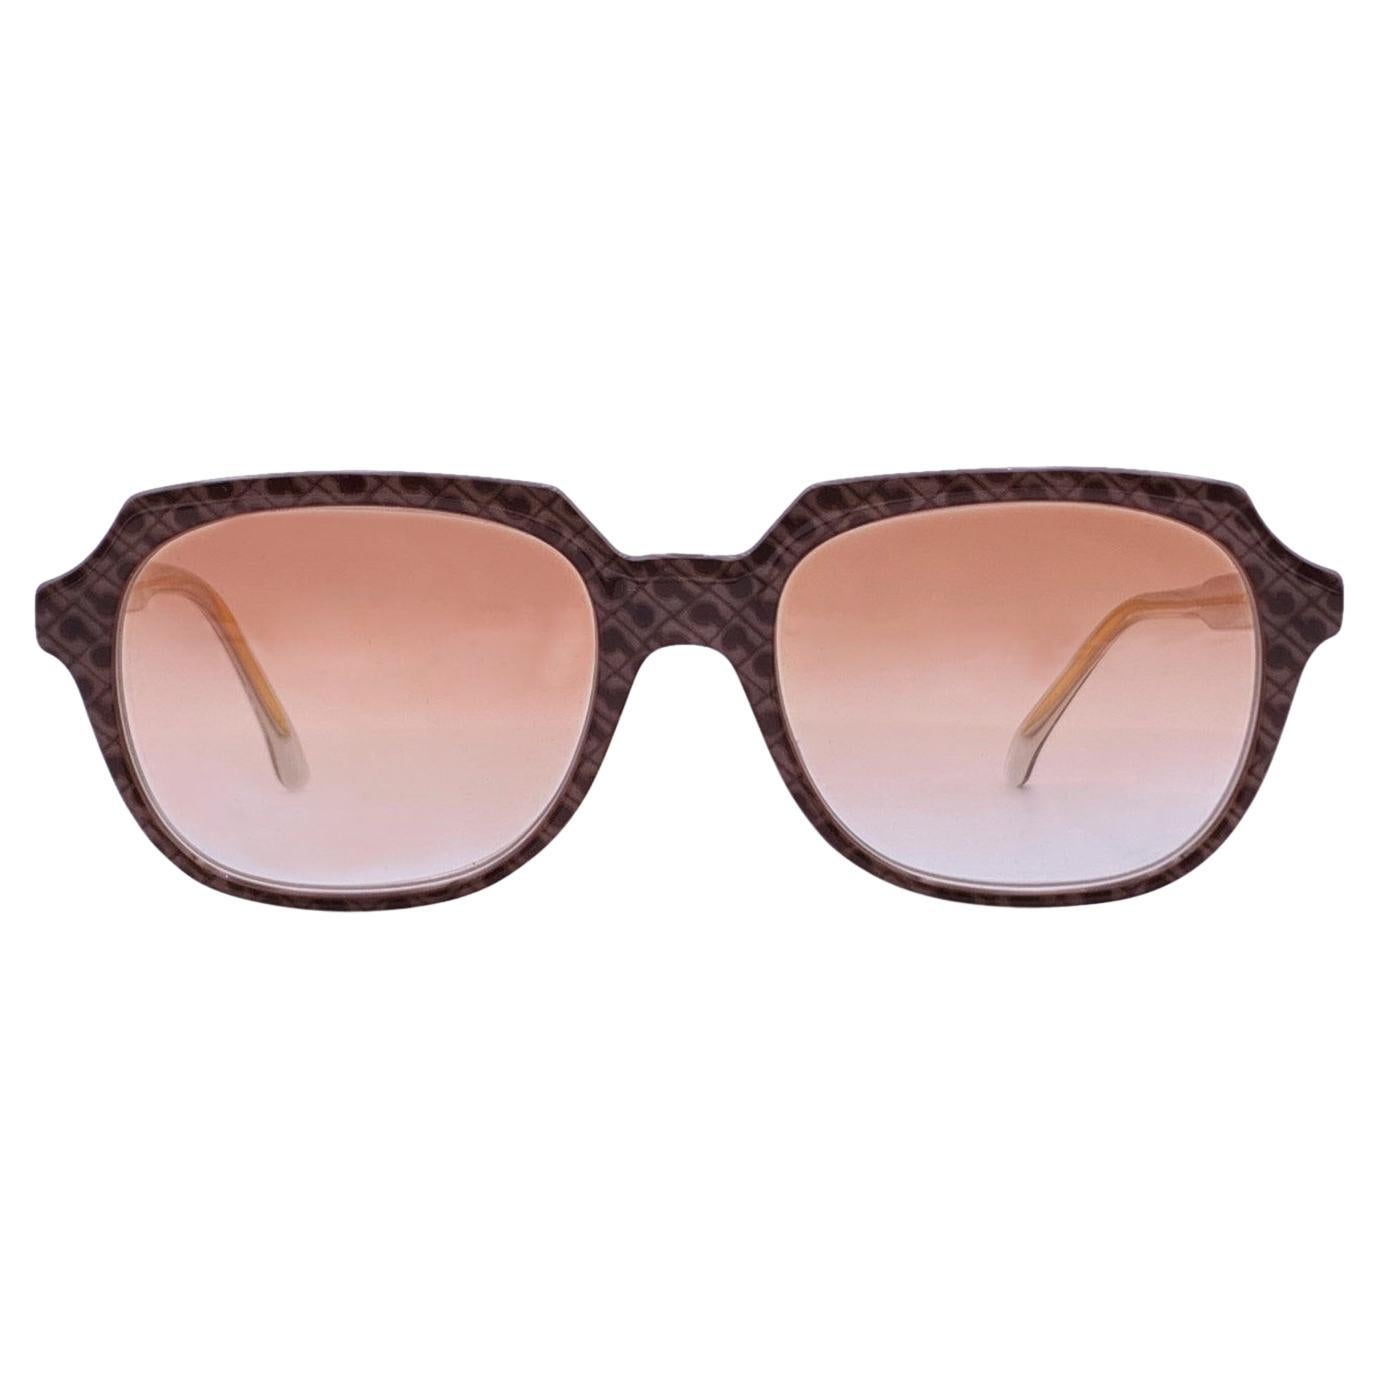 Gherardini Vintage Mint Tortora Logo Sunglasses G/11 56/16 140 mm For Sale